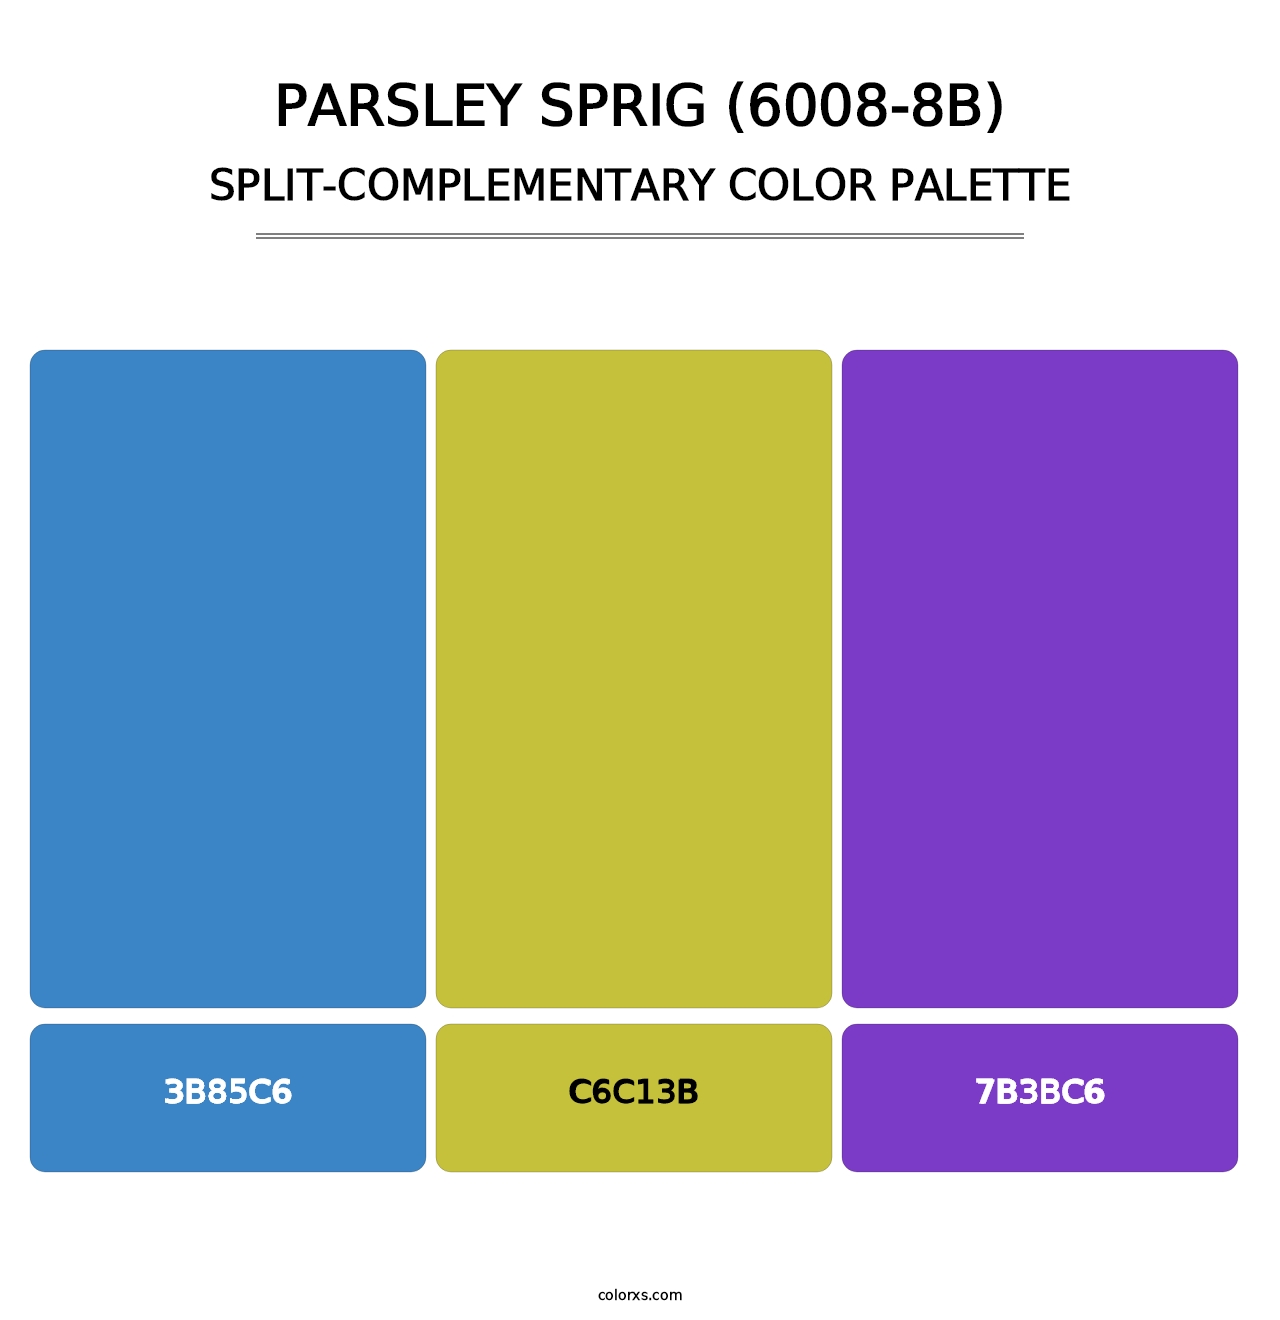 Parsley Sprig (6008-8B) - Split-Complementary Color Palette